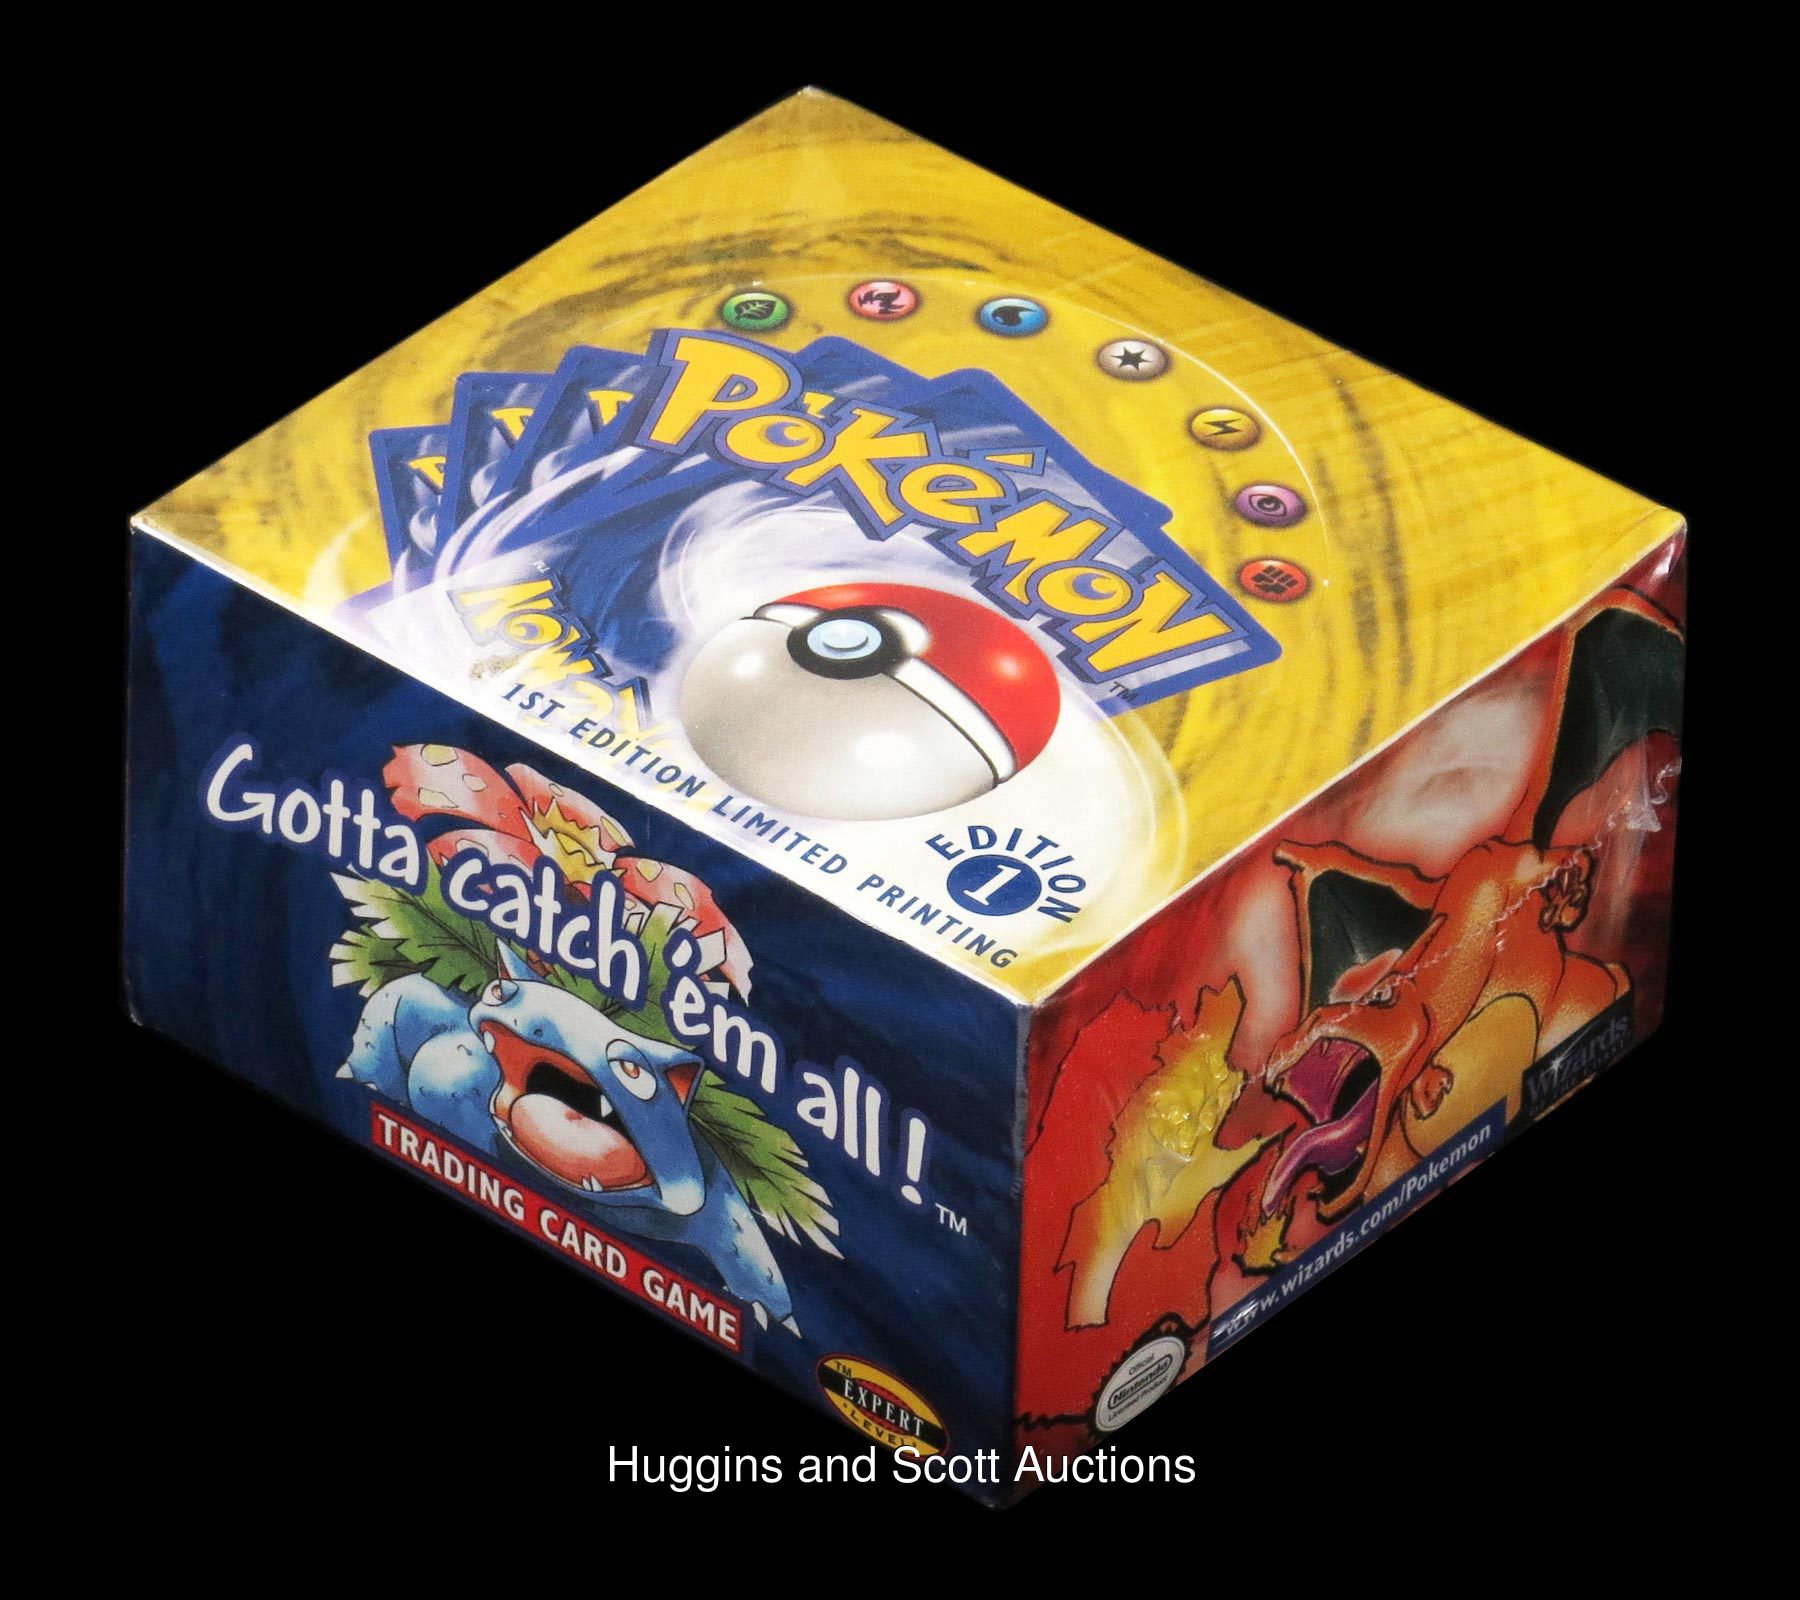 pokemon cards booster box